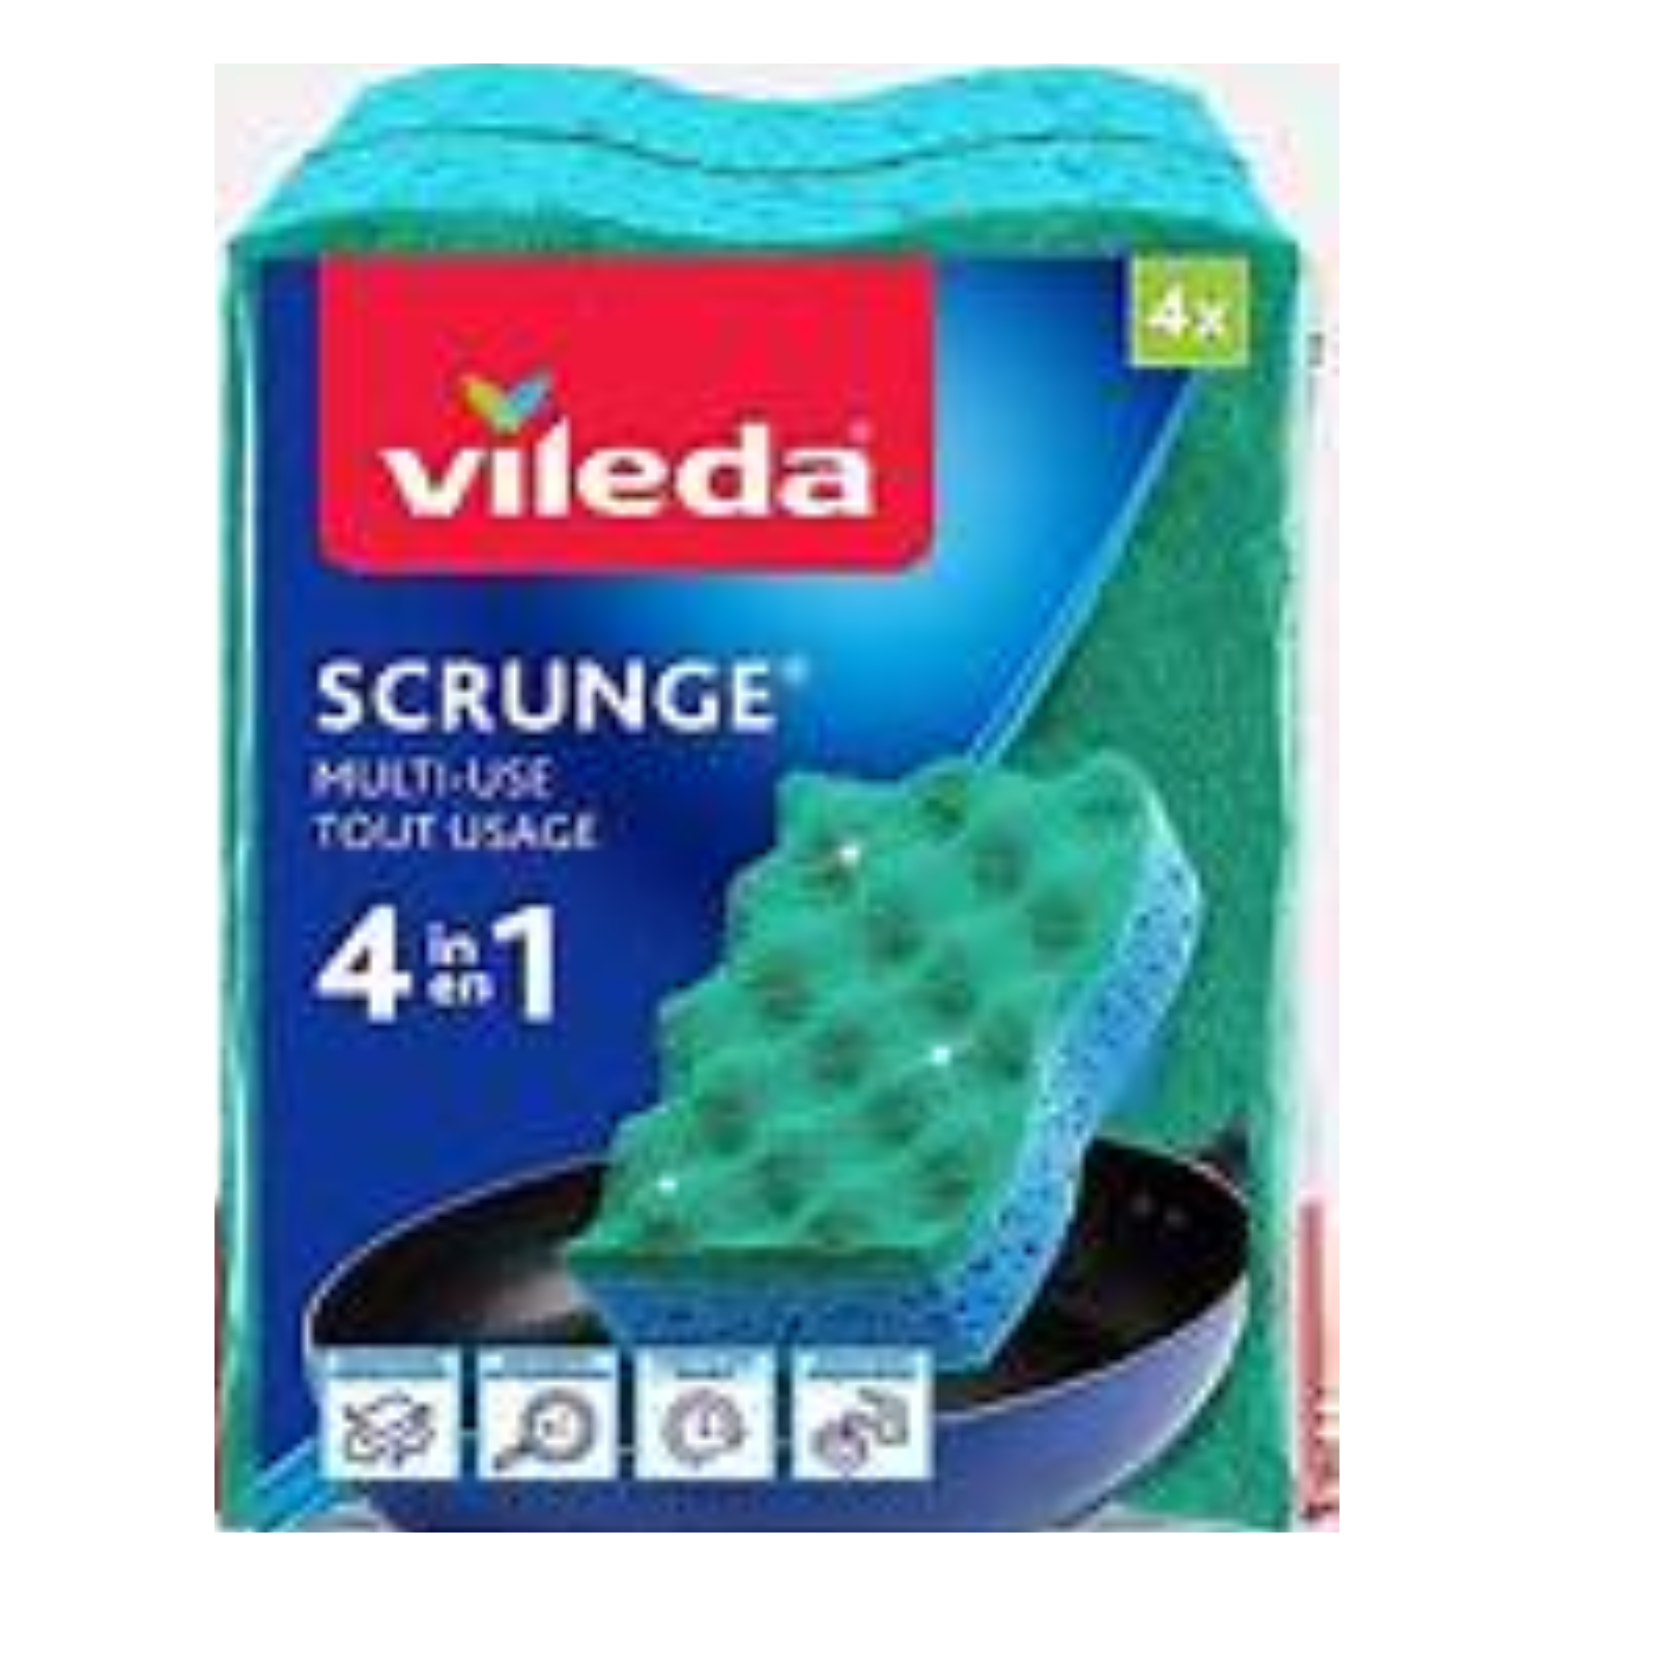 Vileda Scrunge Multi-Use Non Scratch Scrub Sponge 4ct